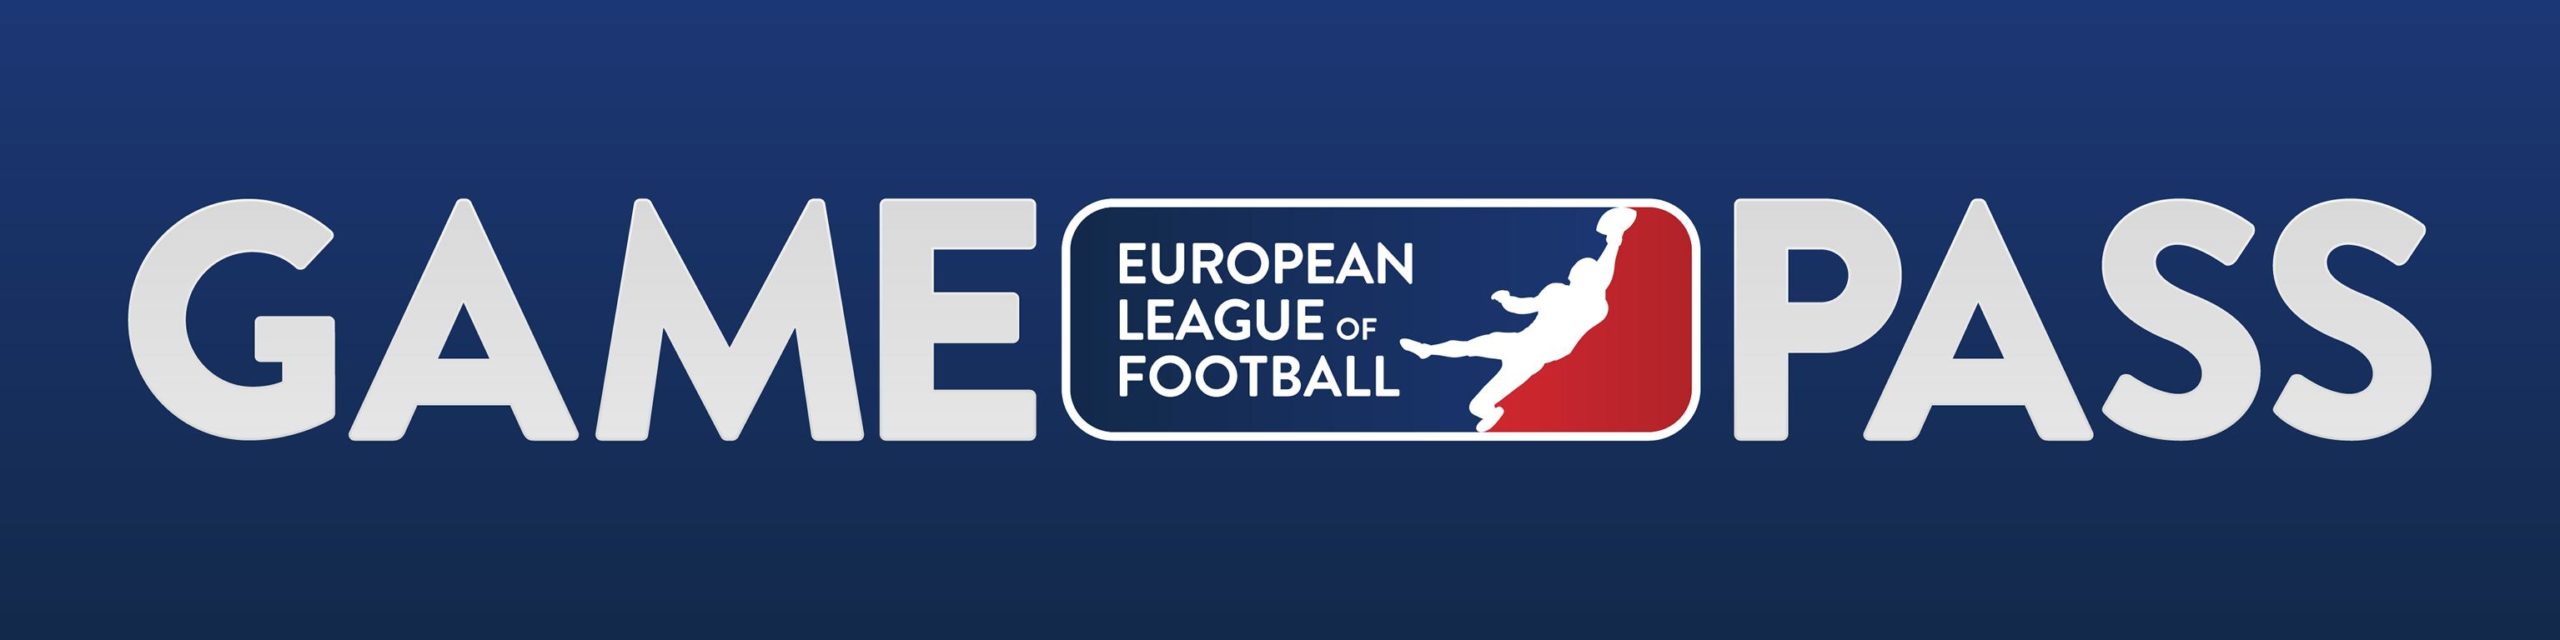 Hamburg Sea Devils  European League of Football